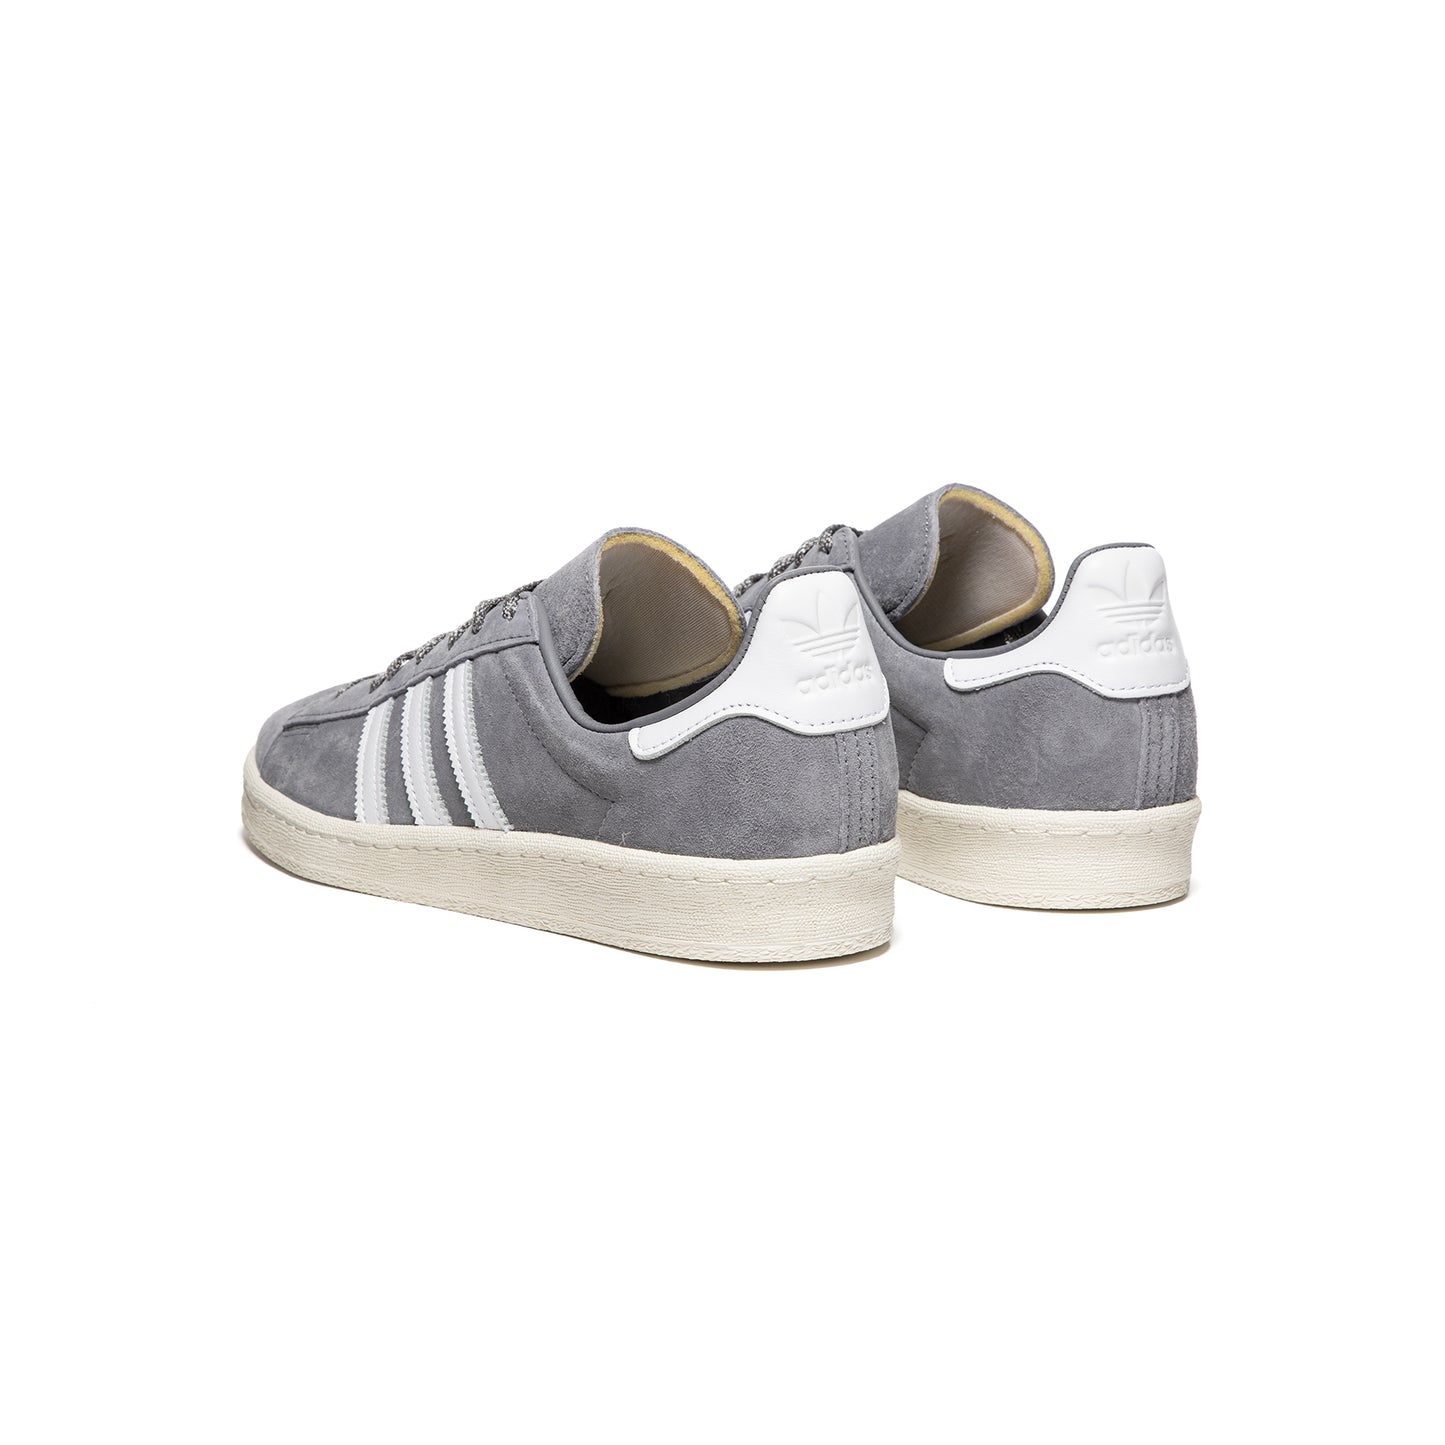 adidas Campus 80s (Grey/Feather White/Off white)